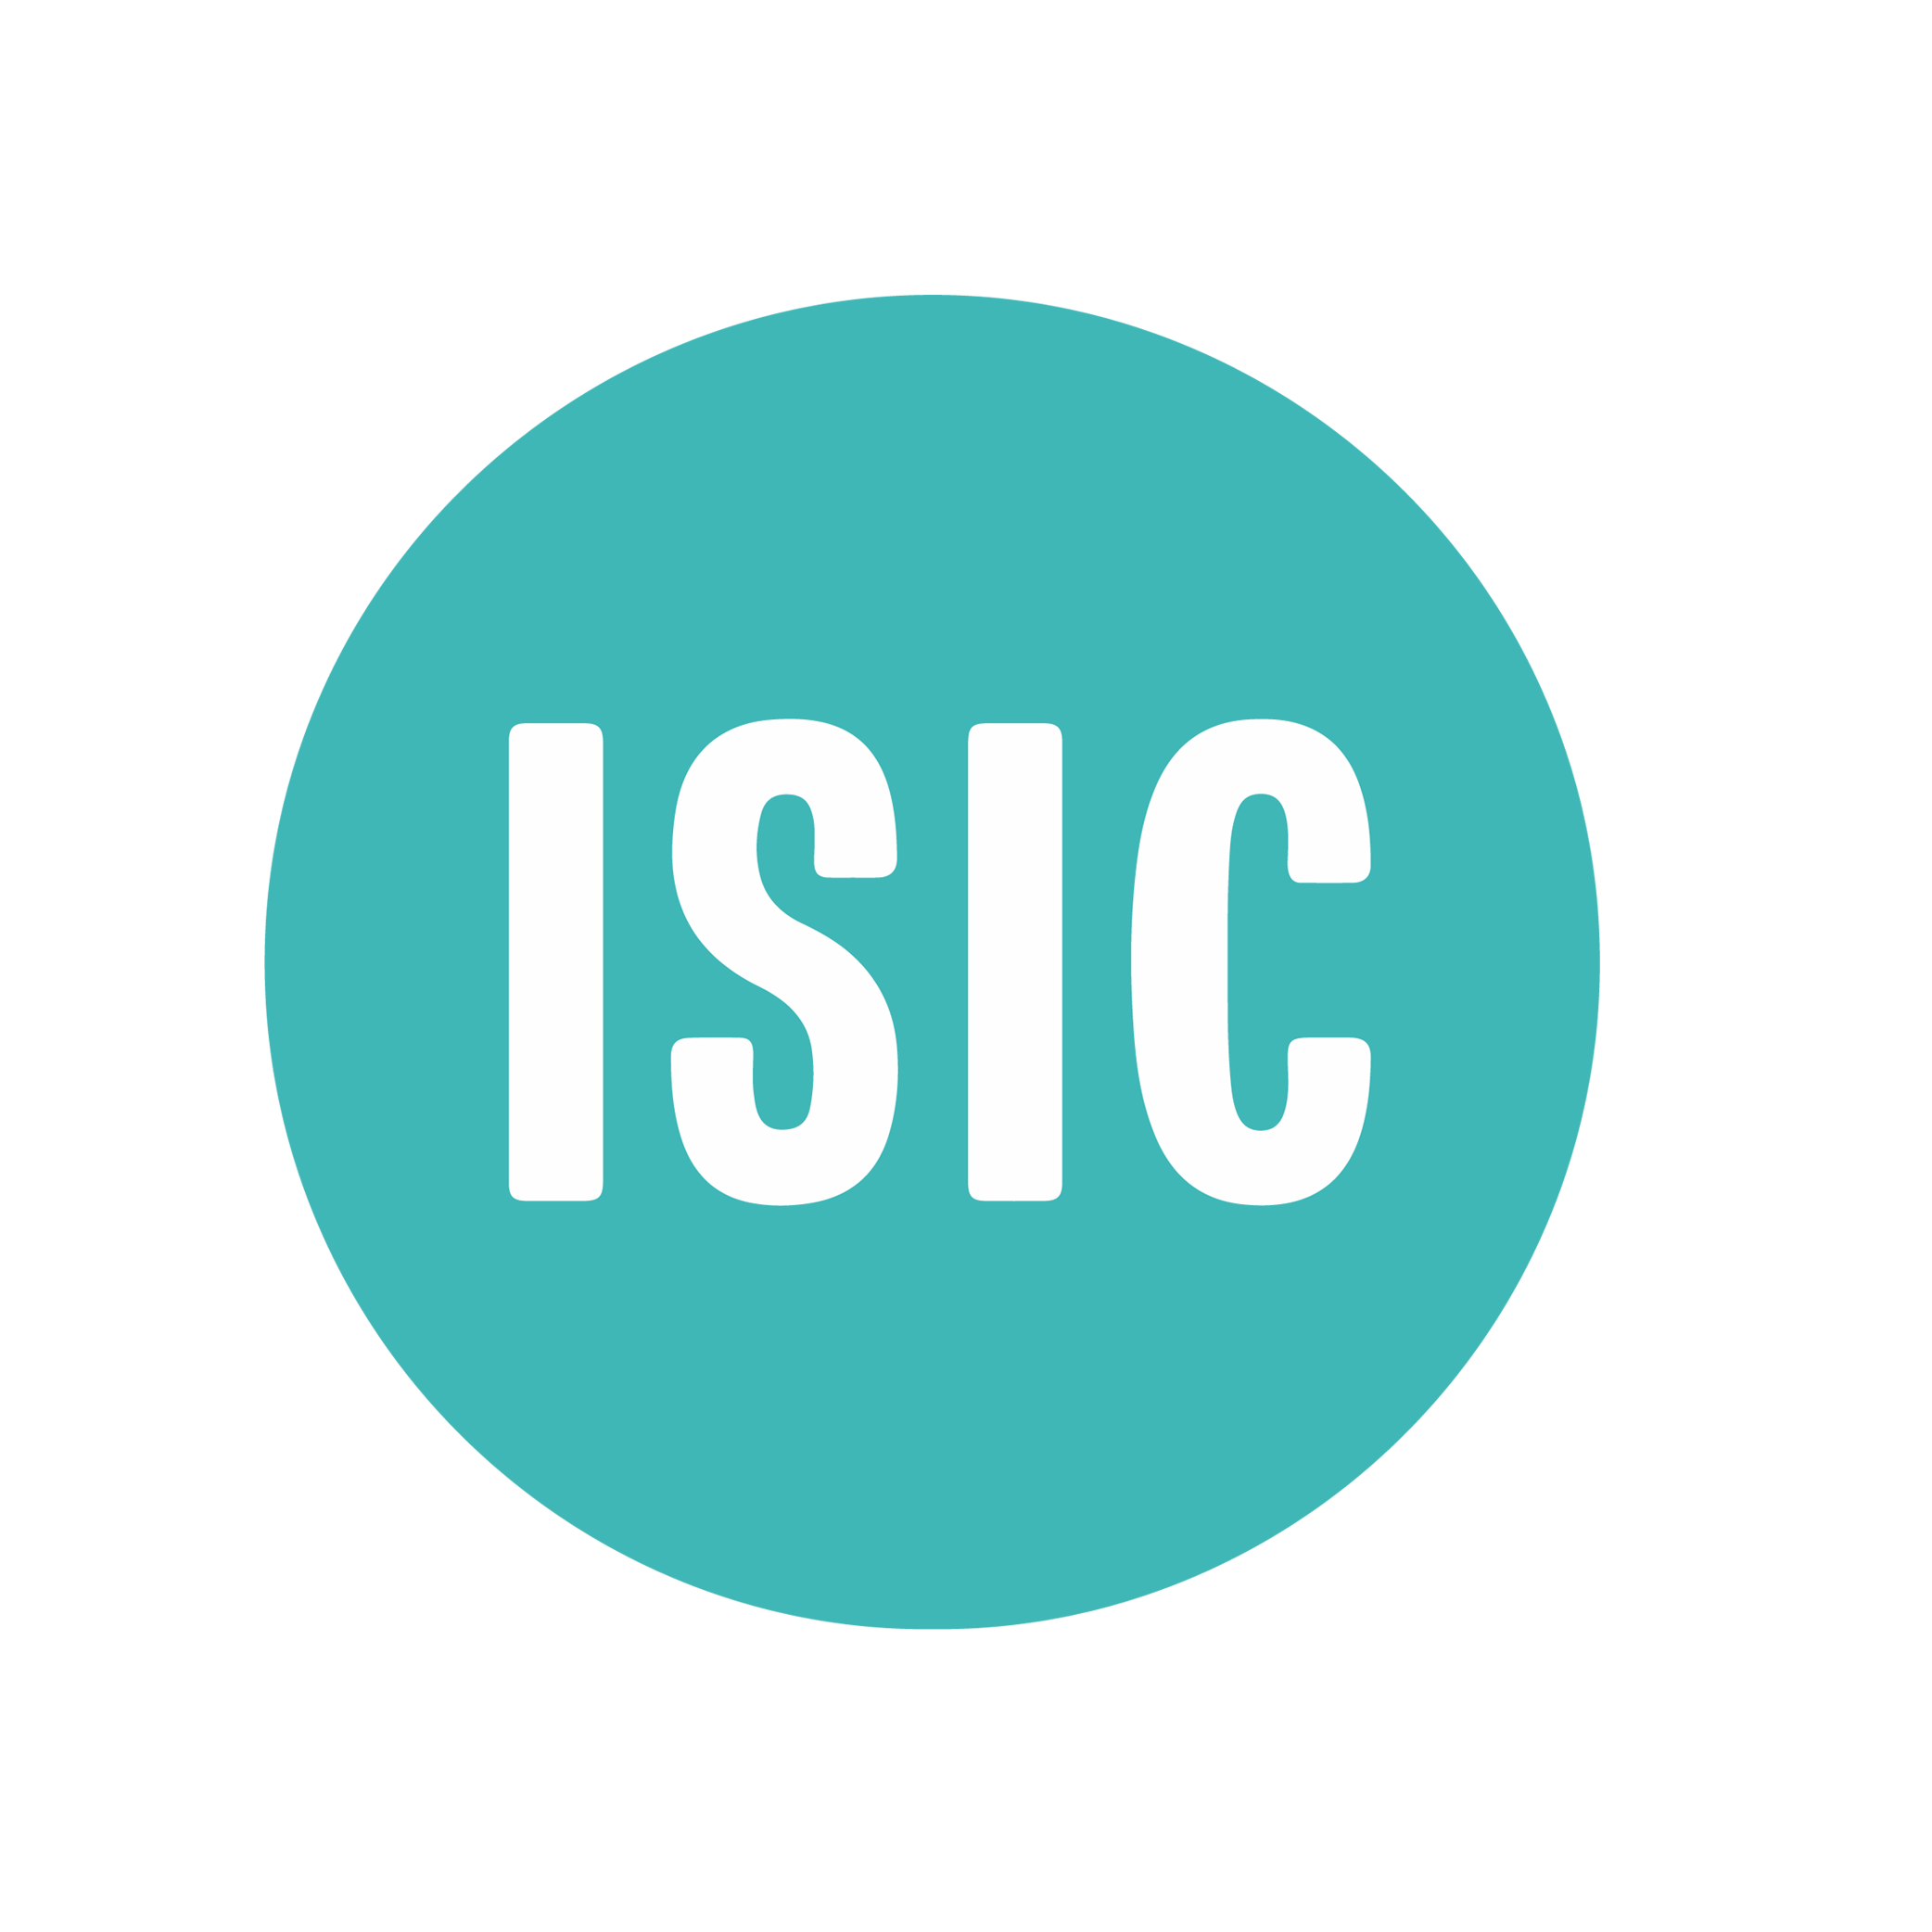 International Student Identification Association (ISIC)